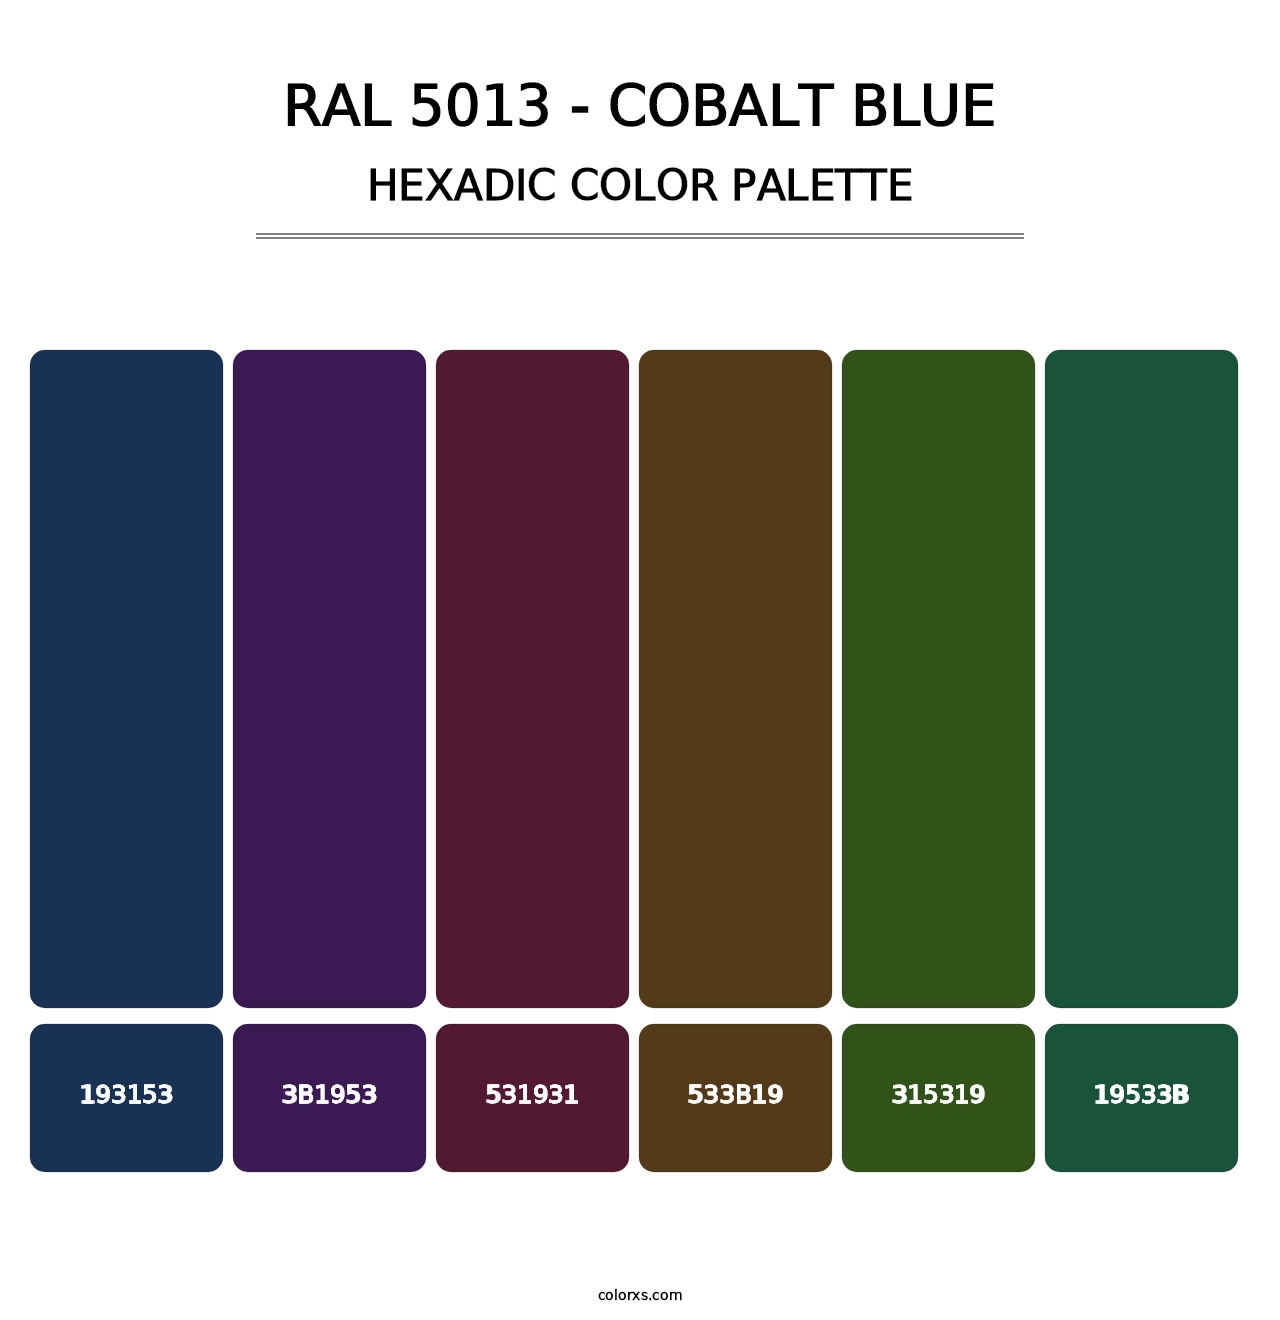 RAL 5013 - Cobalt Blue - Hexadic Color Palette